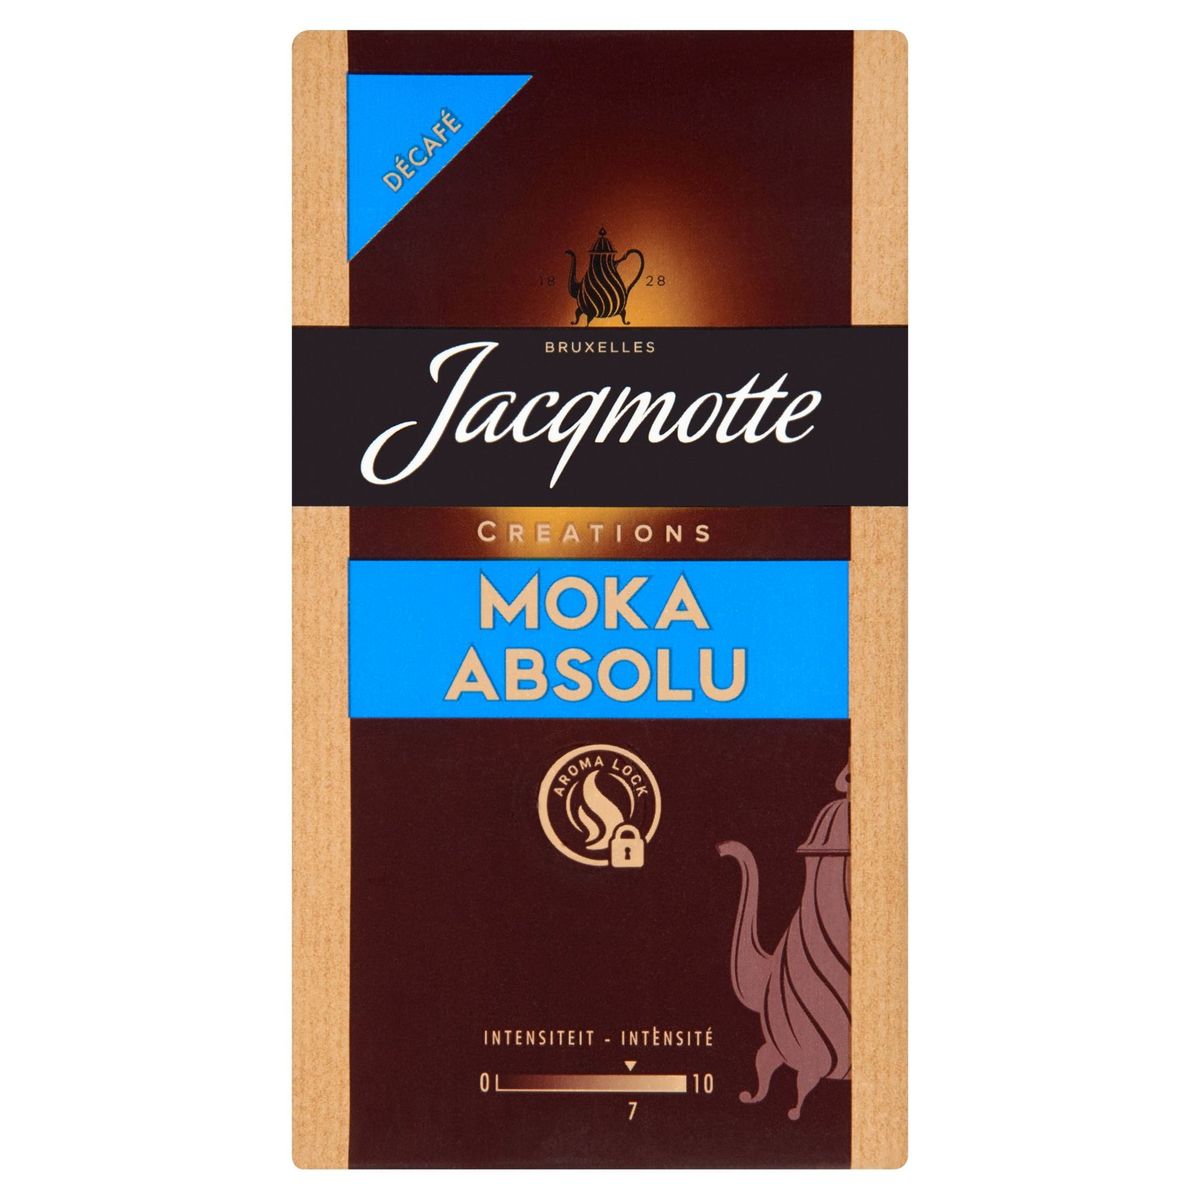 Jacqmotte Café Moulu Moka Absolu Decafe 250 g